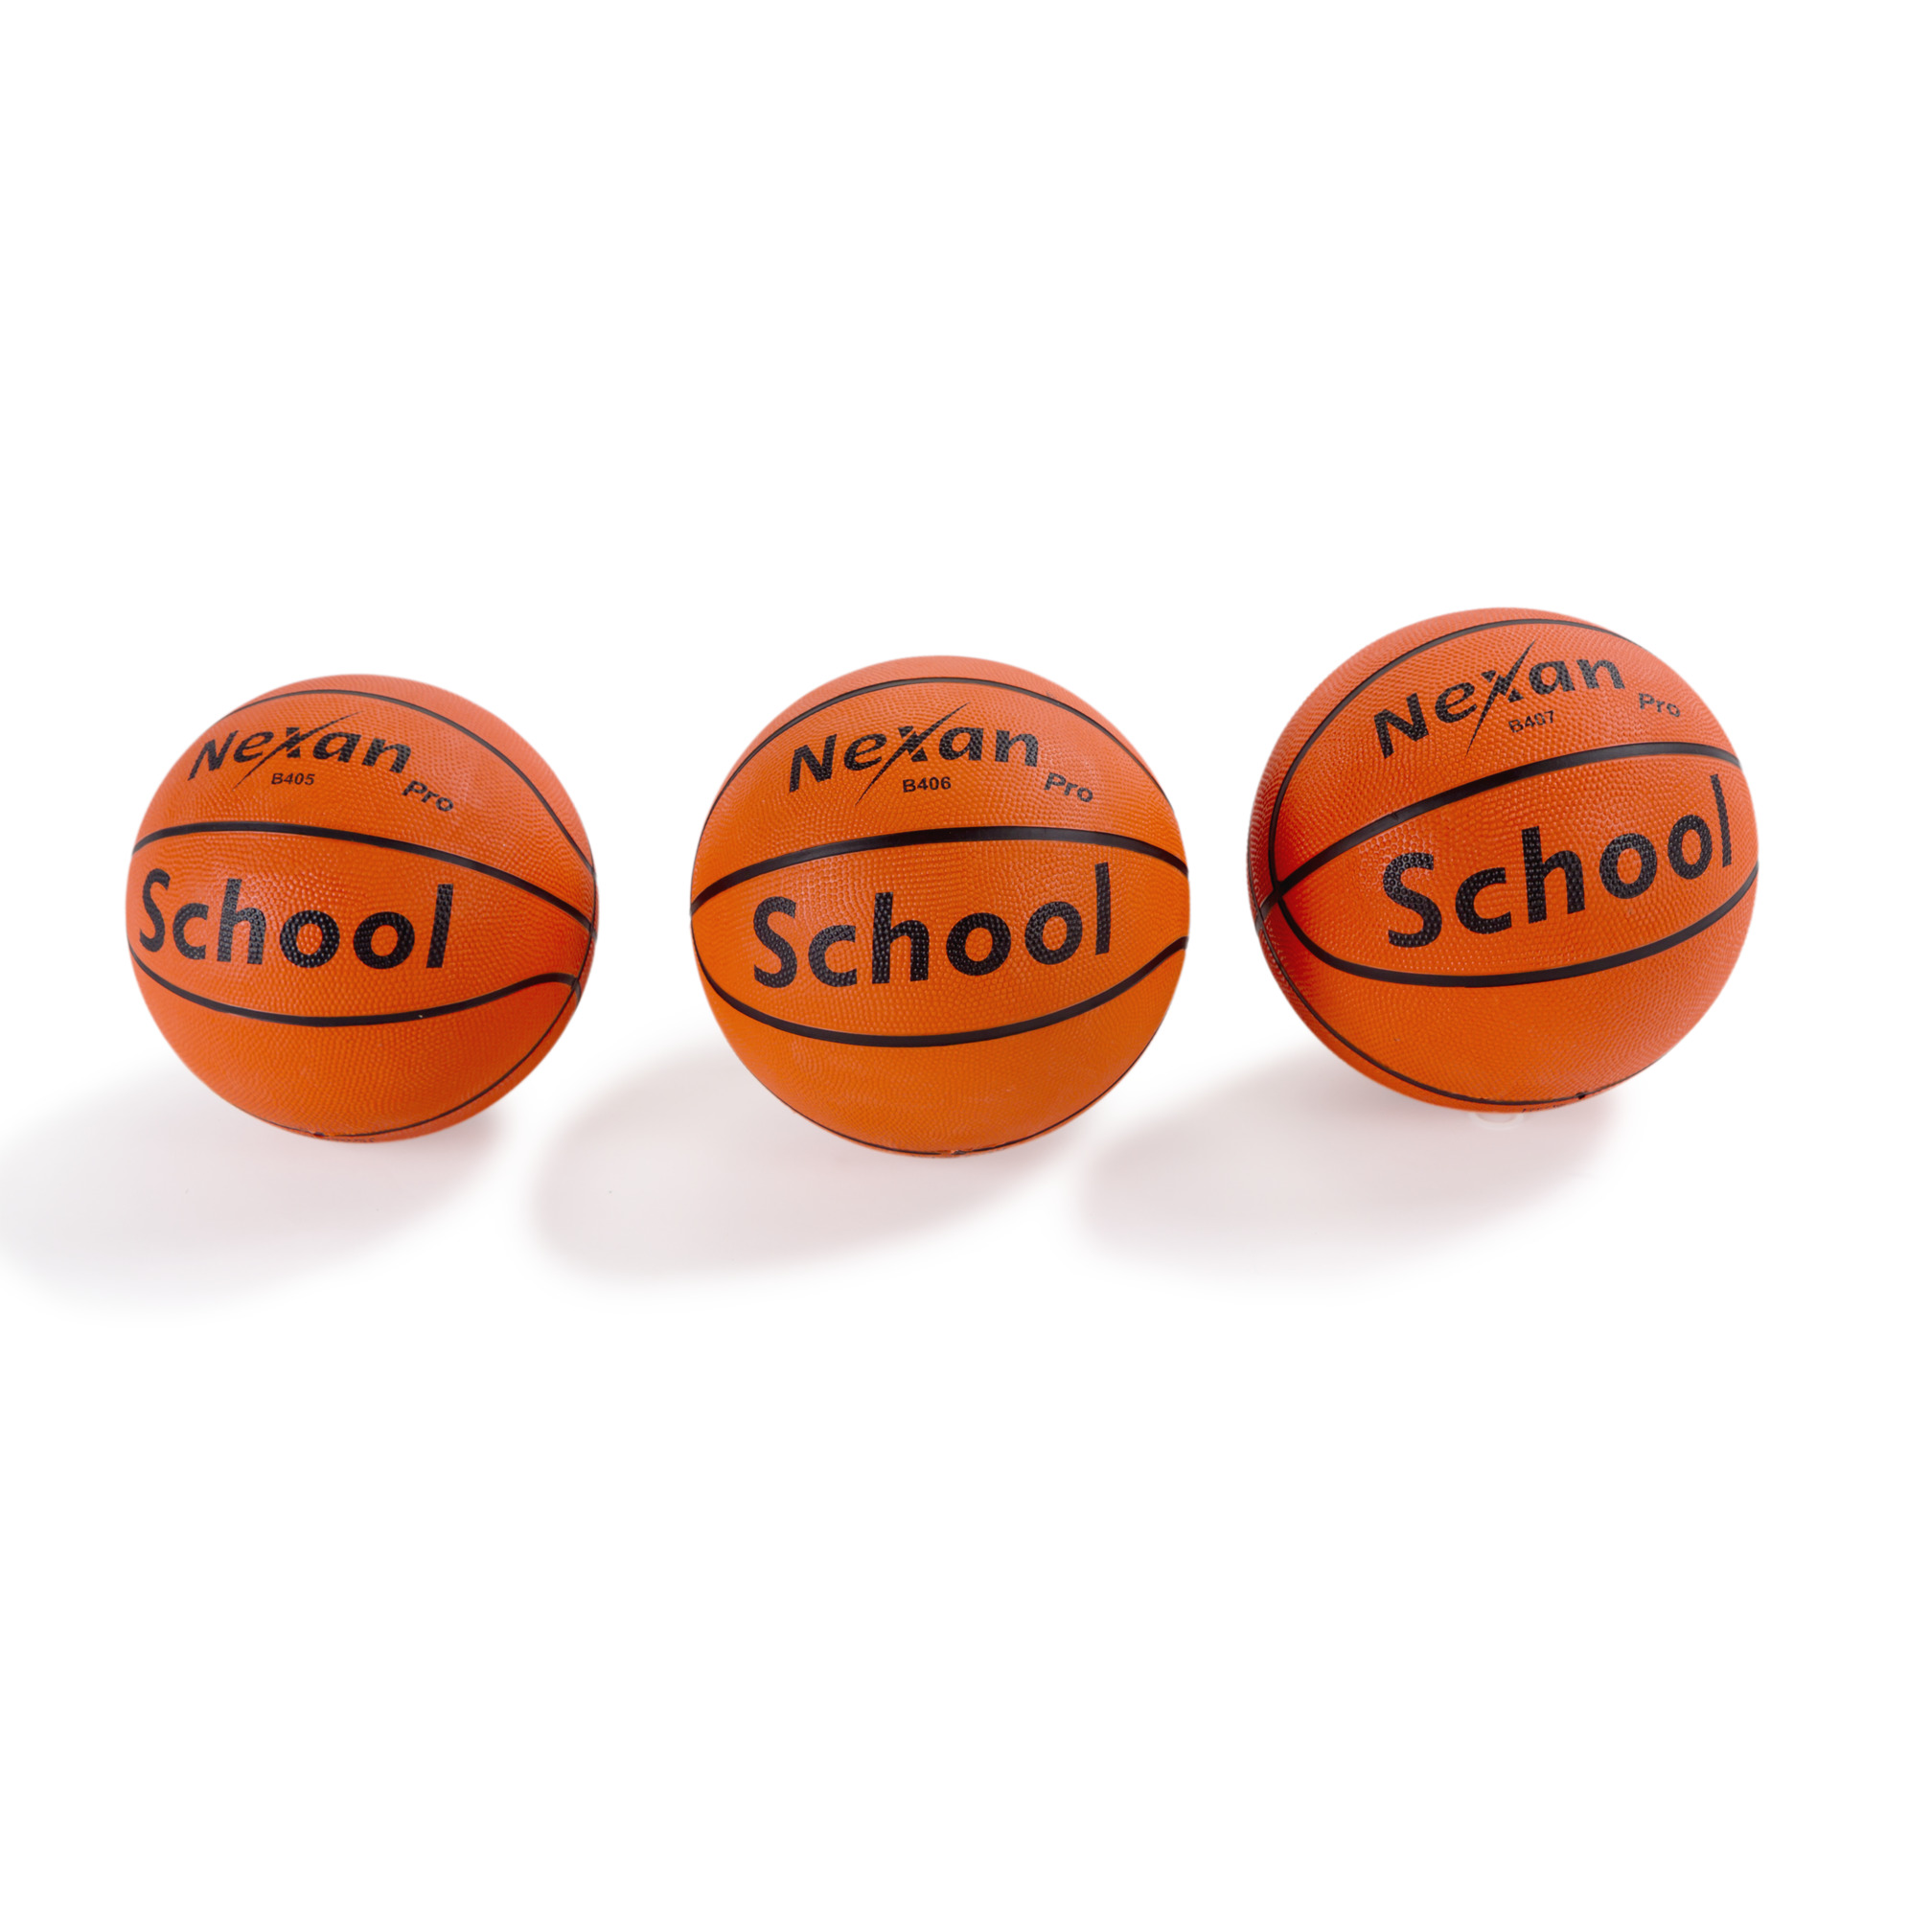 Nexan Basketball SCHOOL, size 6